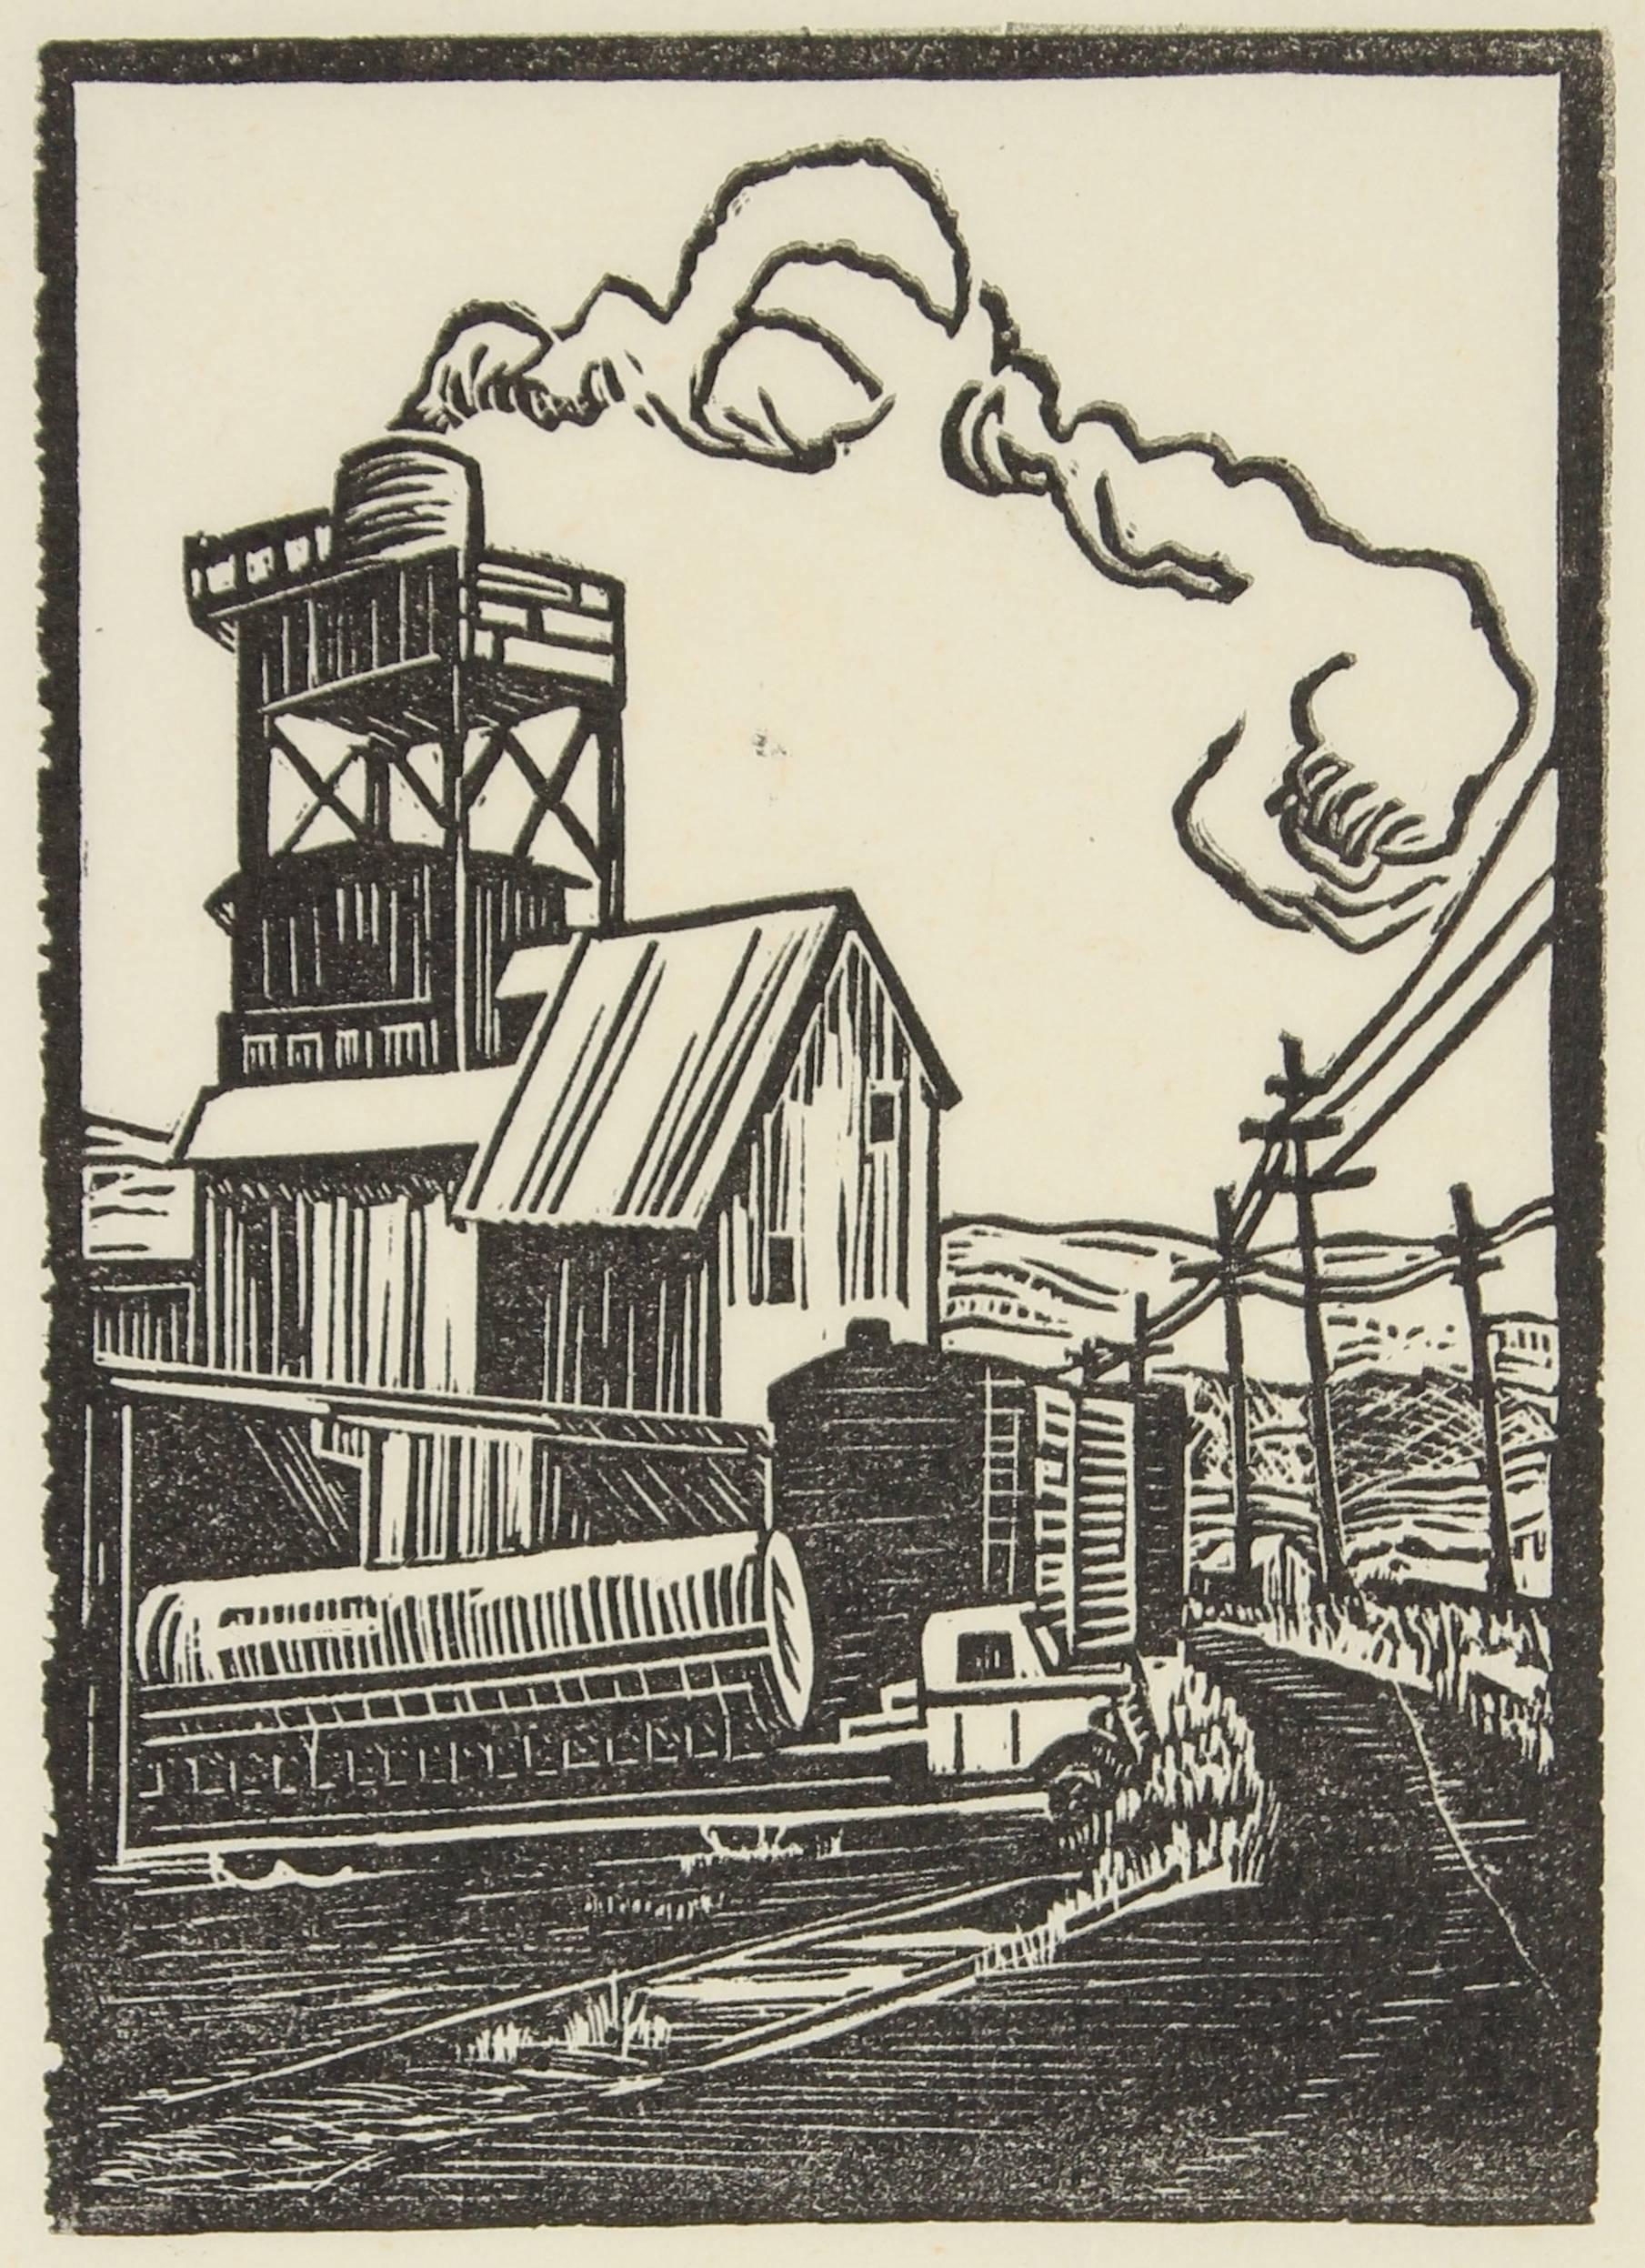 Mary Watterick Evans Landscape Print - Train Tracks in a Landscape, Linocut on Paper, Circa 1940s